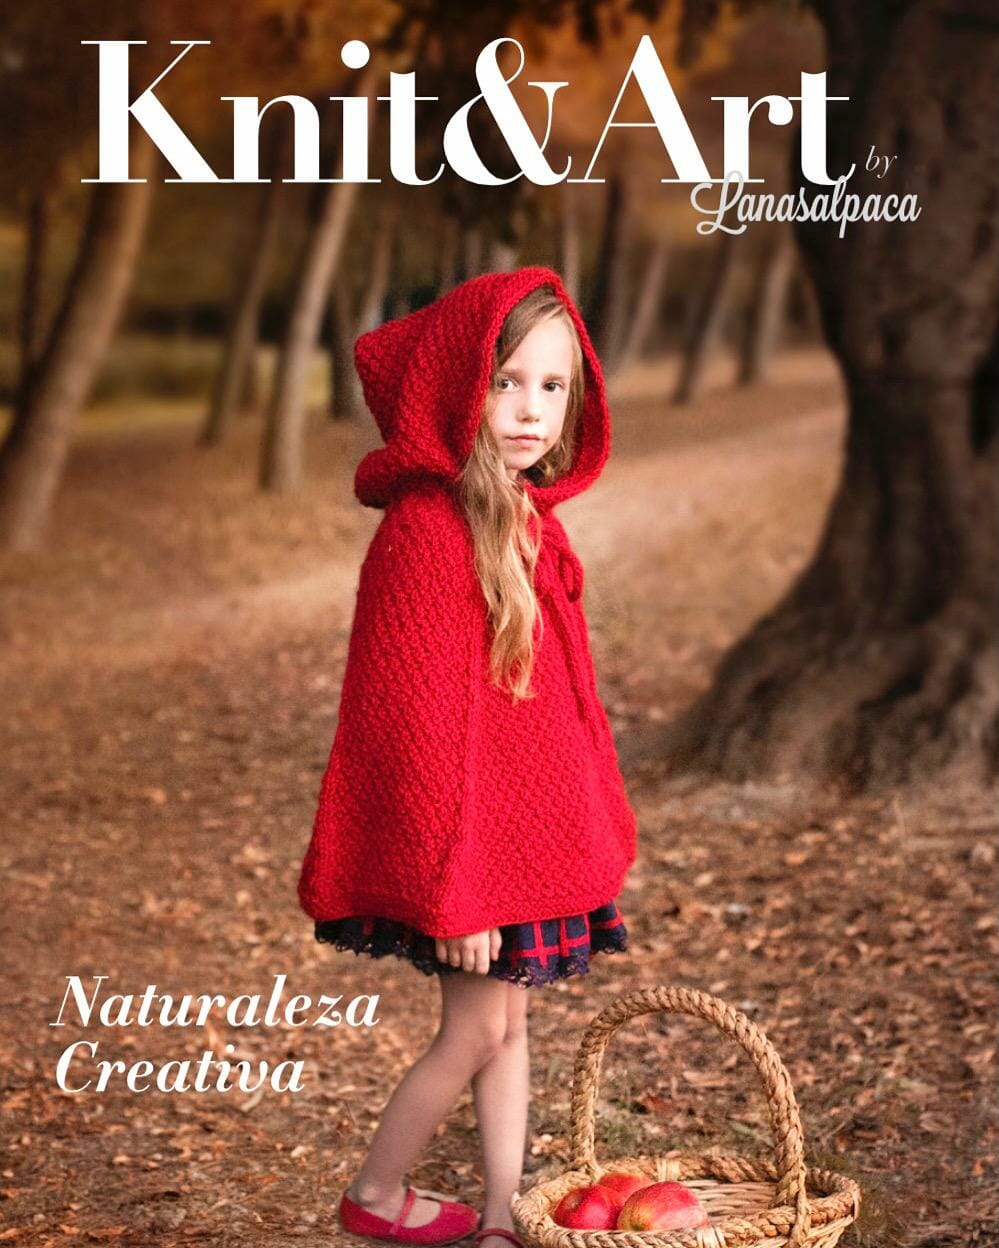 revista_knit&art_nº2_de_lanasalpaca